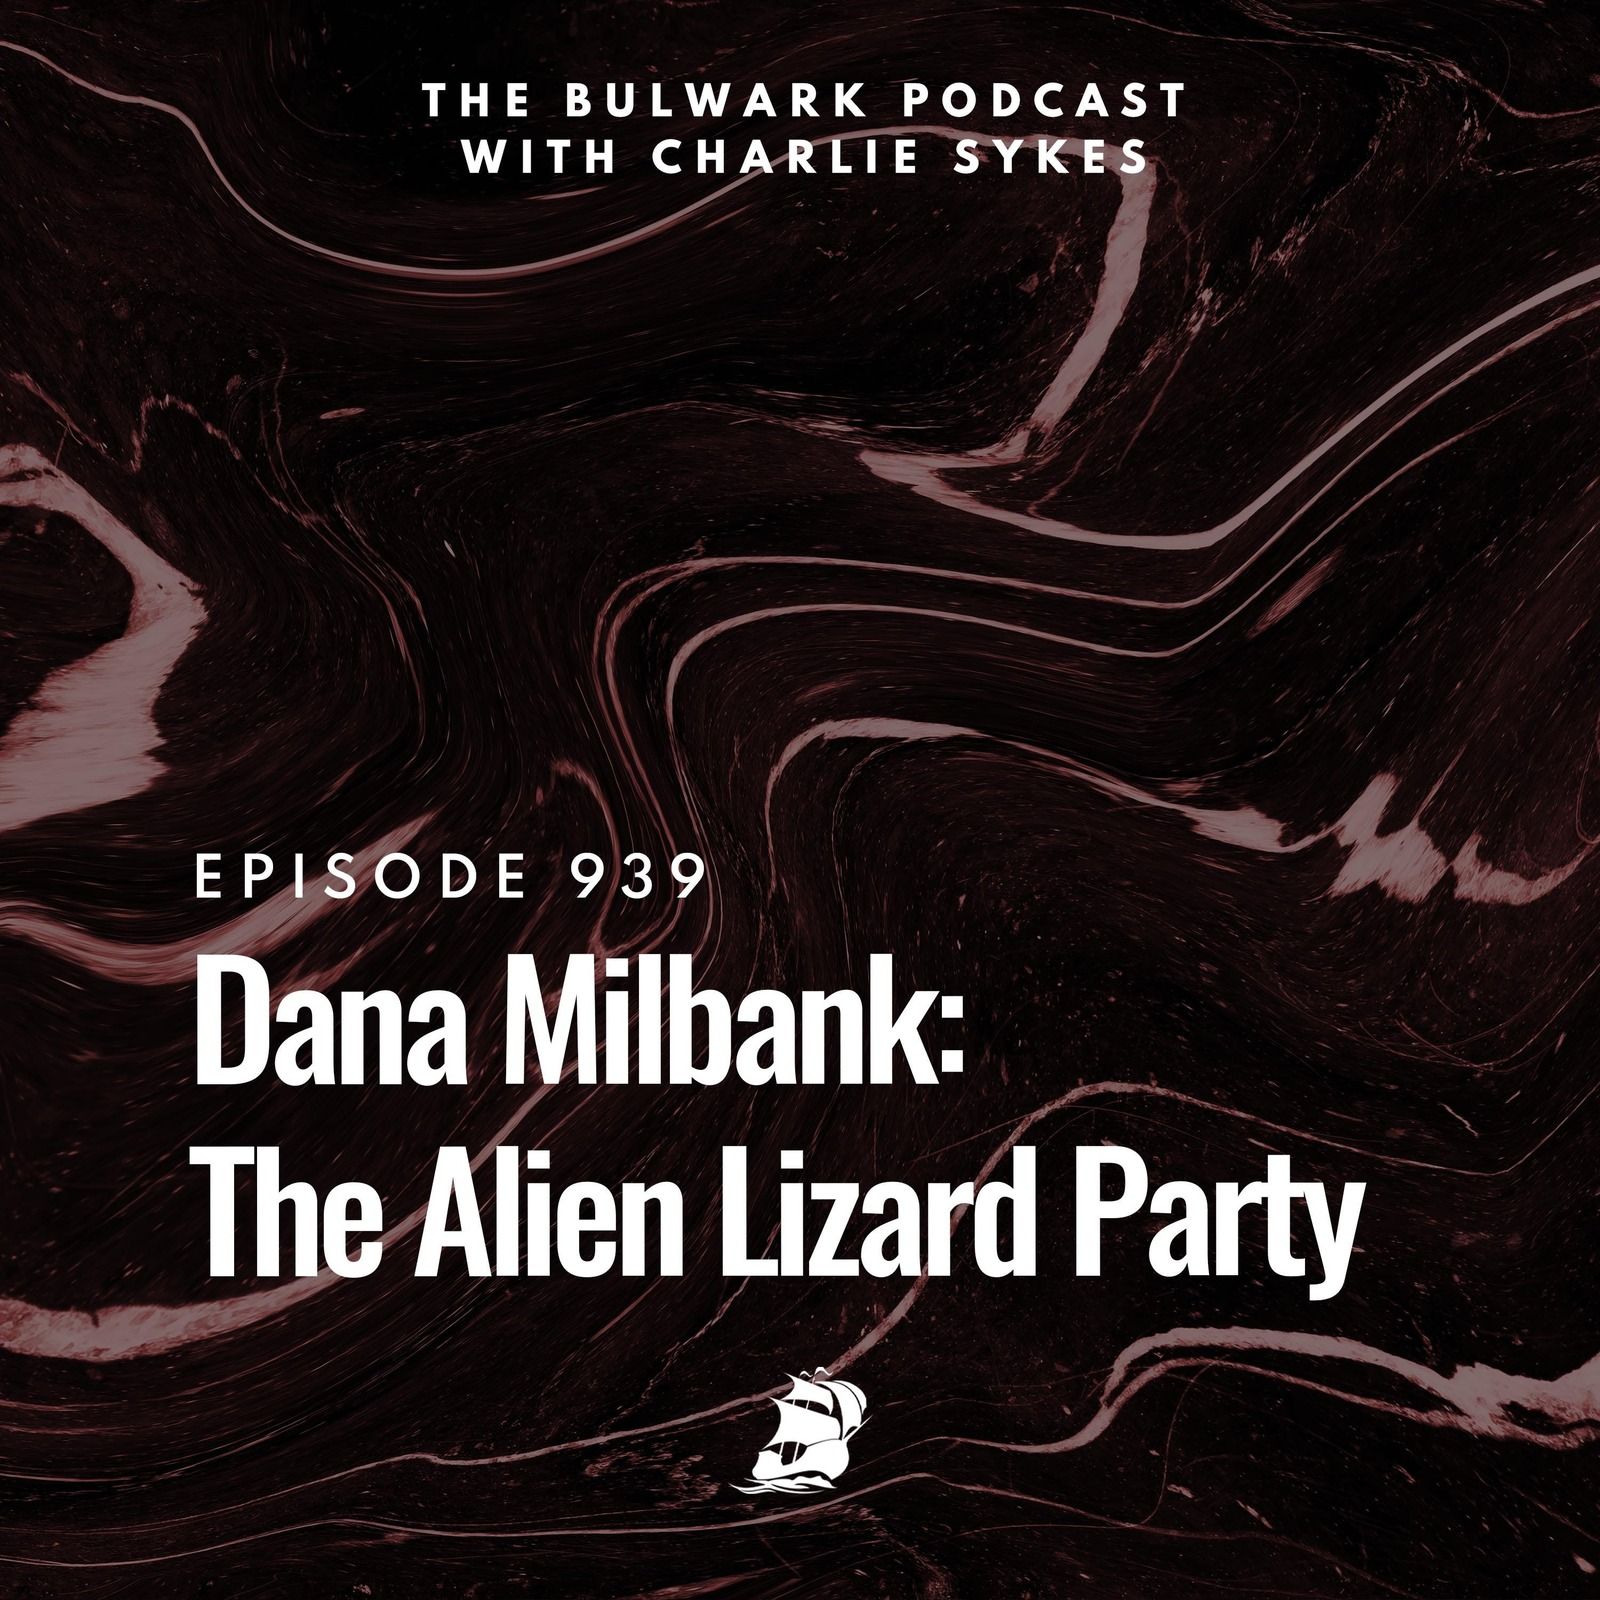 Dana Milbank: The Alien Lizard Party by The Bulwark Podcast